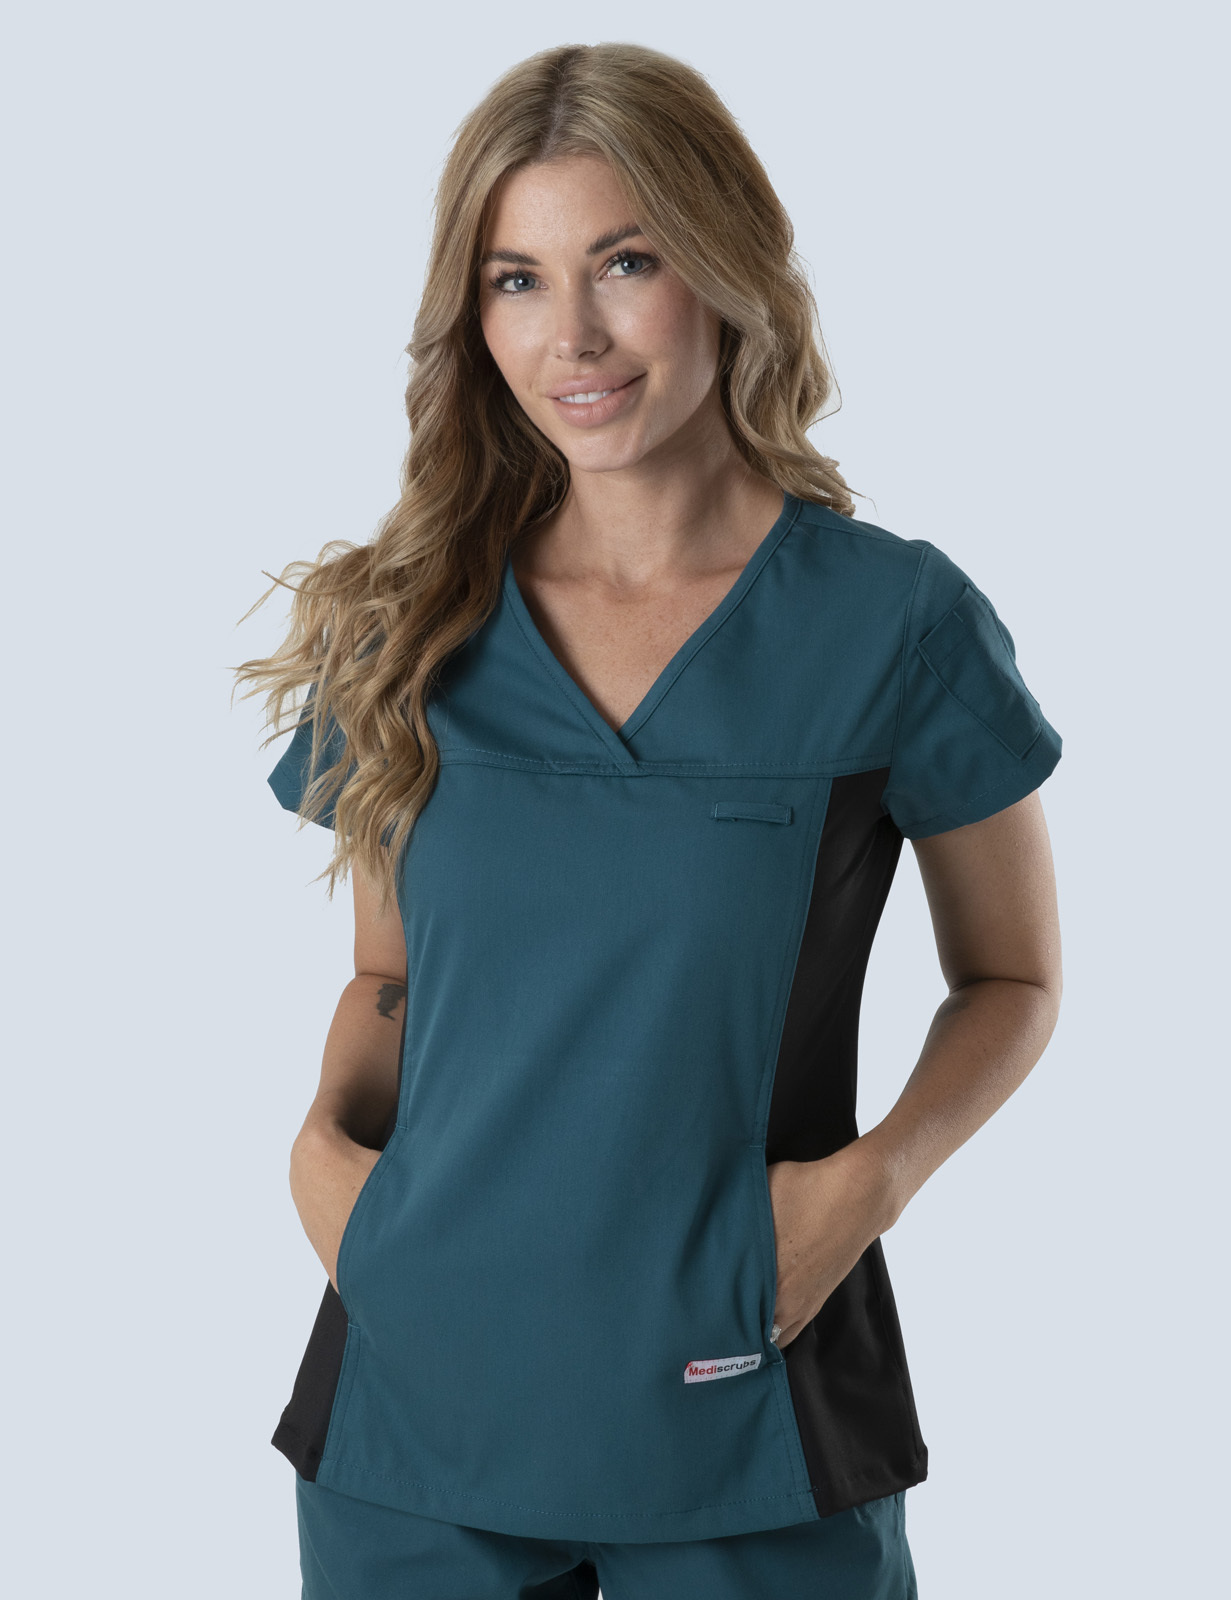 Logan Hospital - Dietitian Assistant (Women's Fit Spandex Top in Caribbean incl Logos)